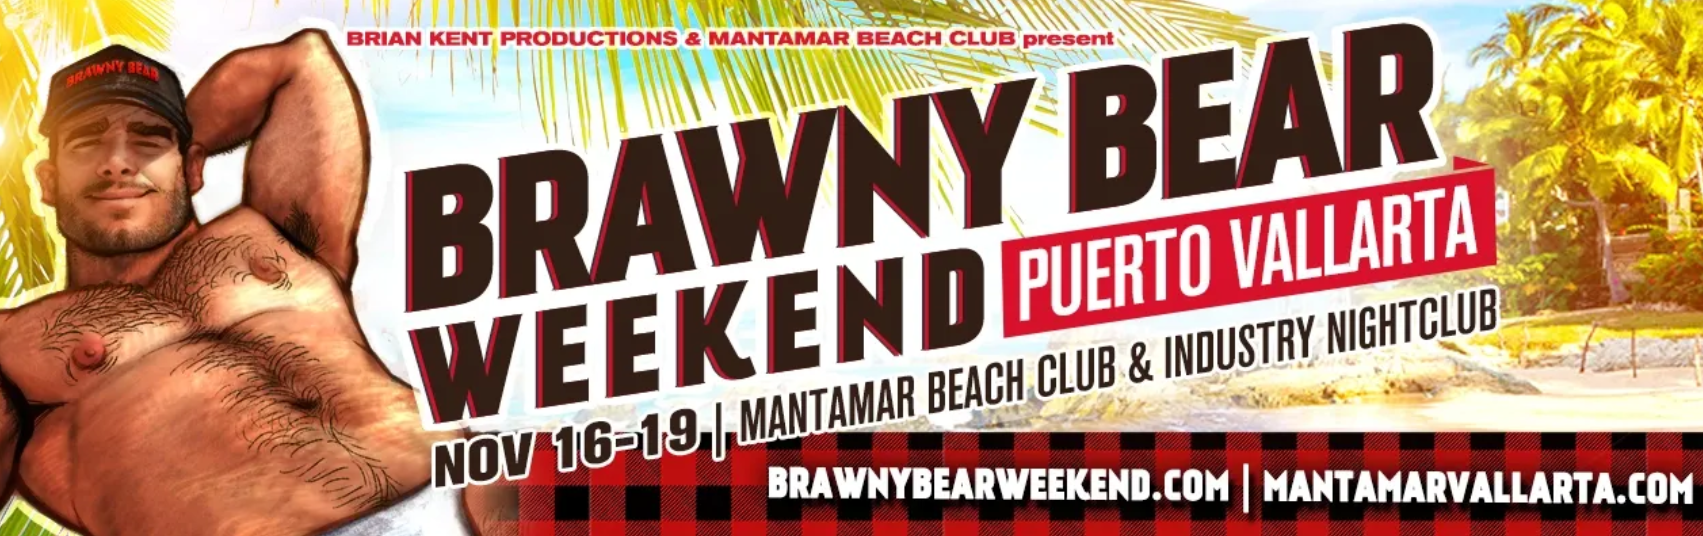 Brawny Bear Weekend Puerto Vallarta